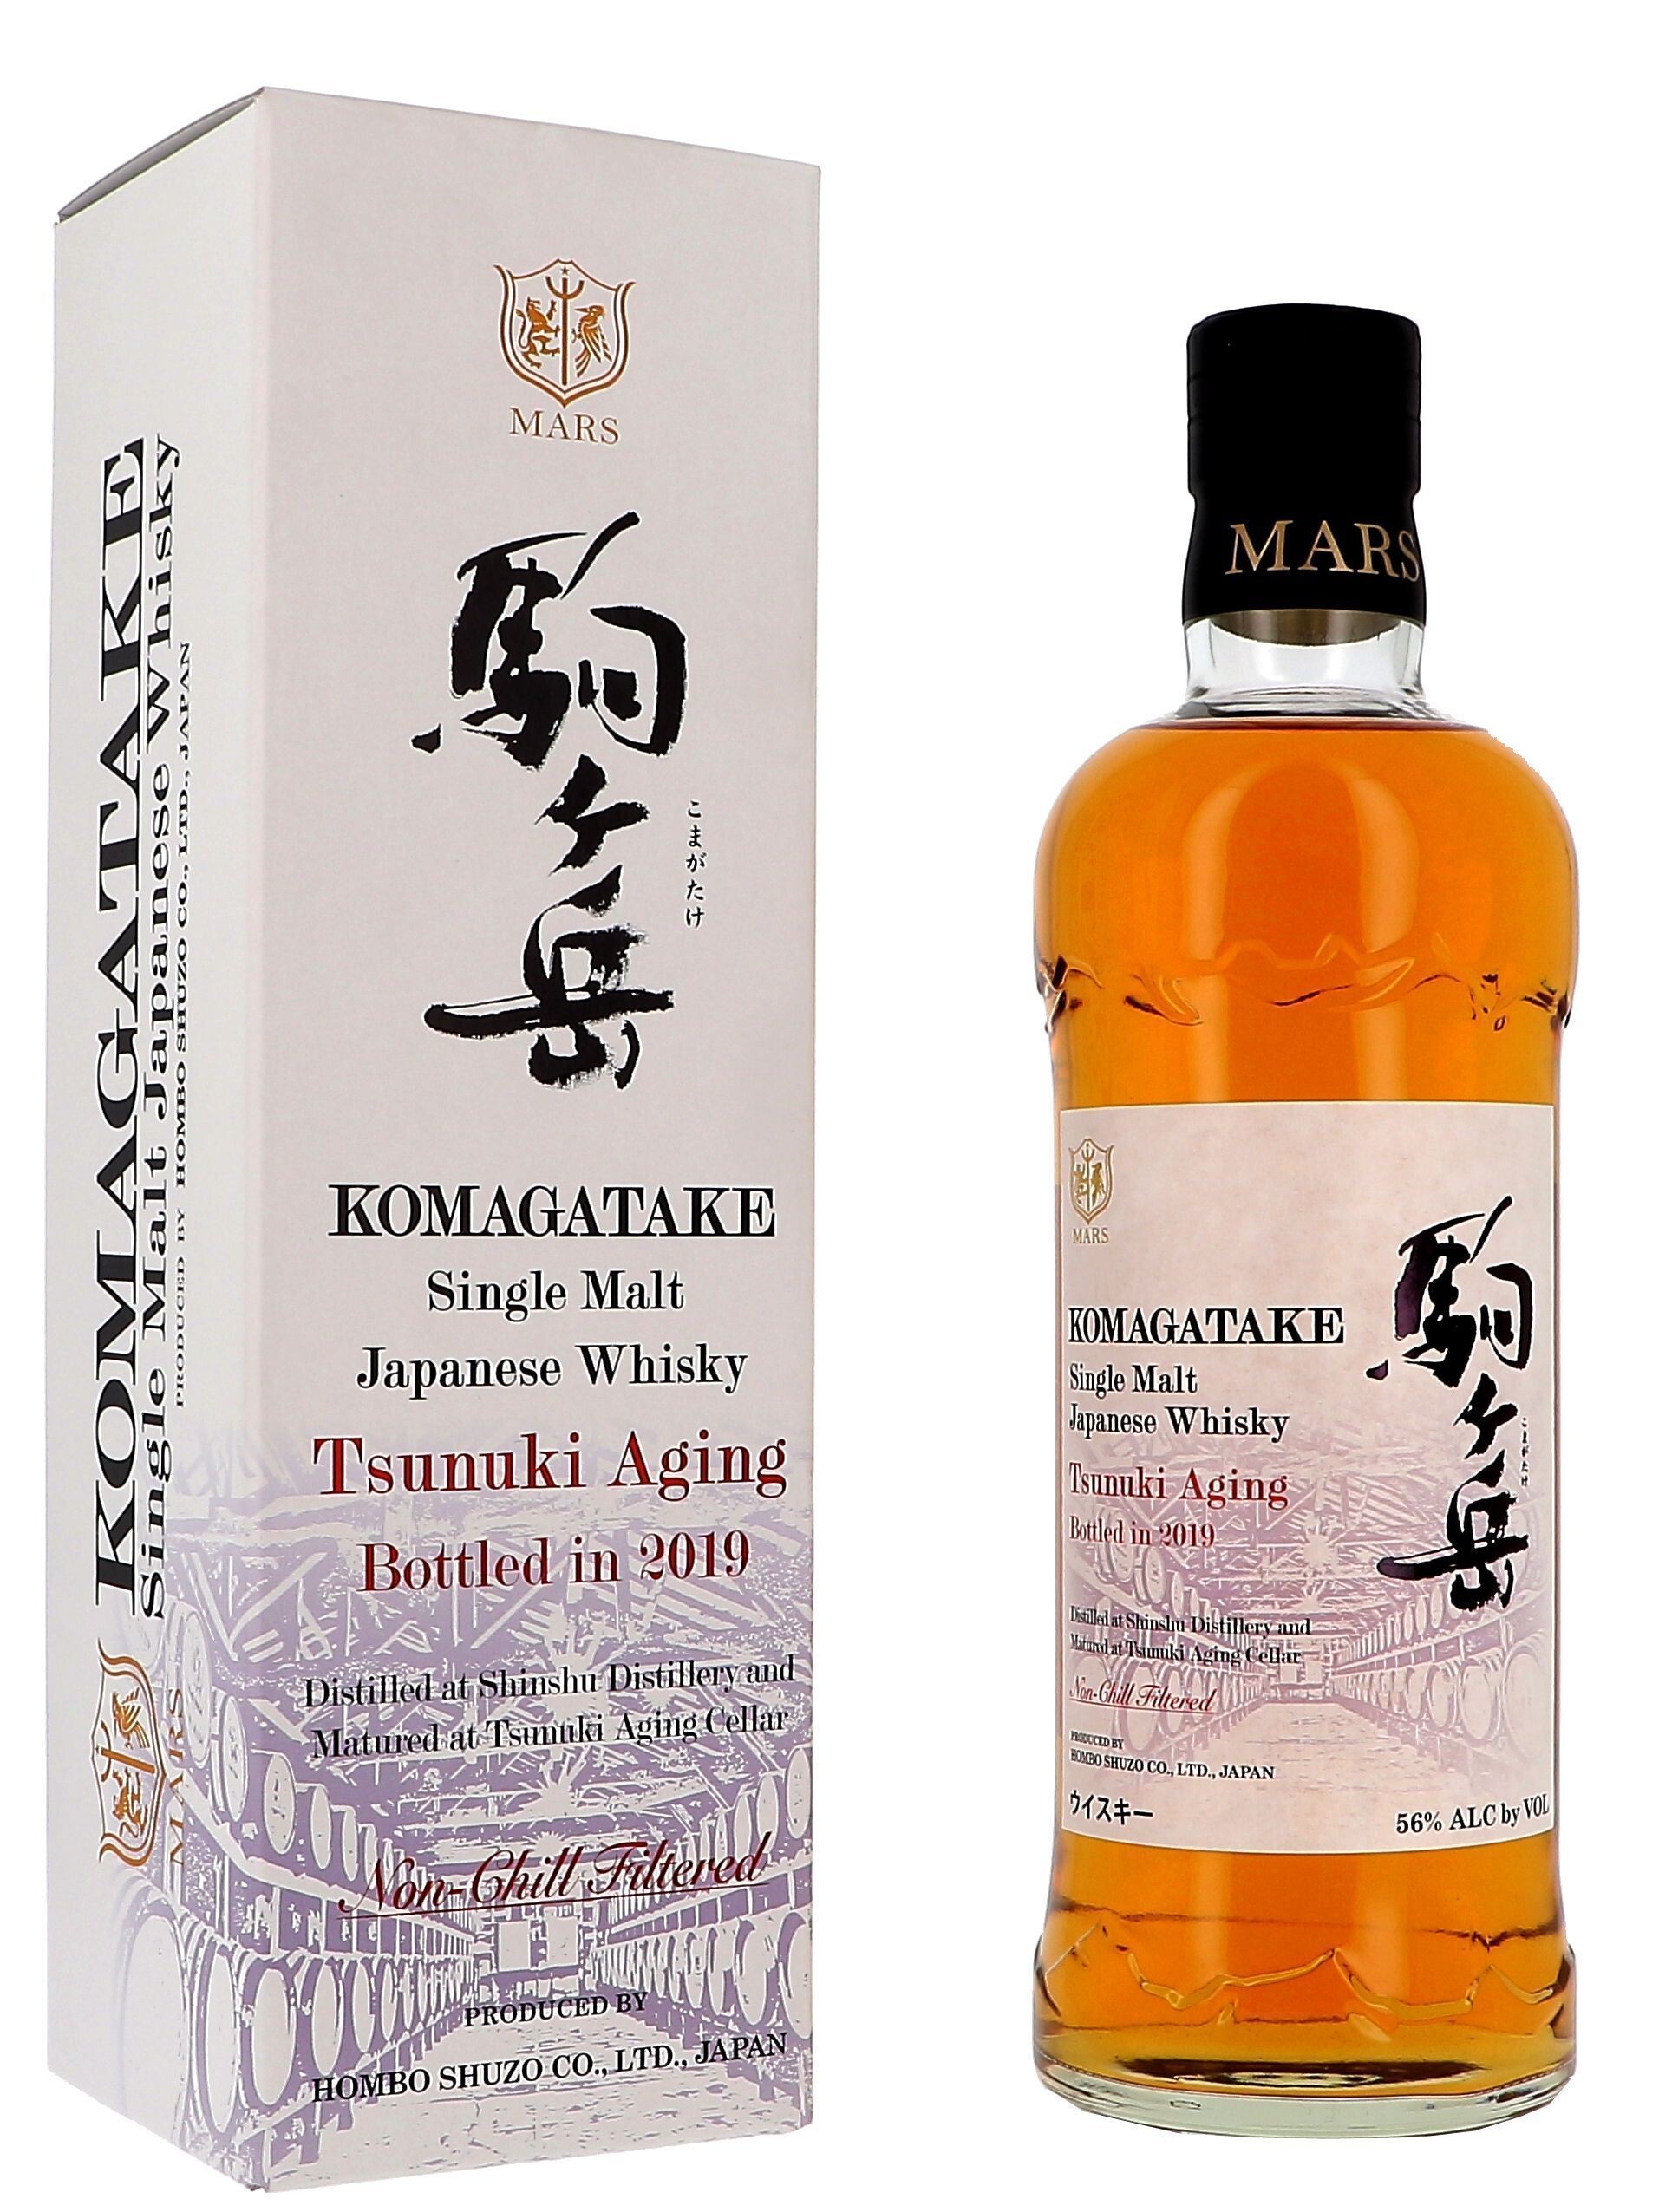 Mars Komagatake Tsunuki Aging 2019 Limited Edition 70cl 56% Japanese Single Malt Whisky (Whisky)